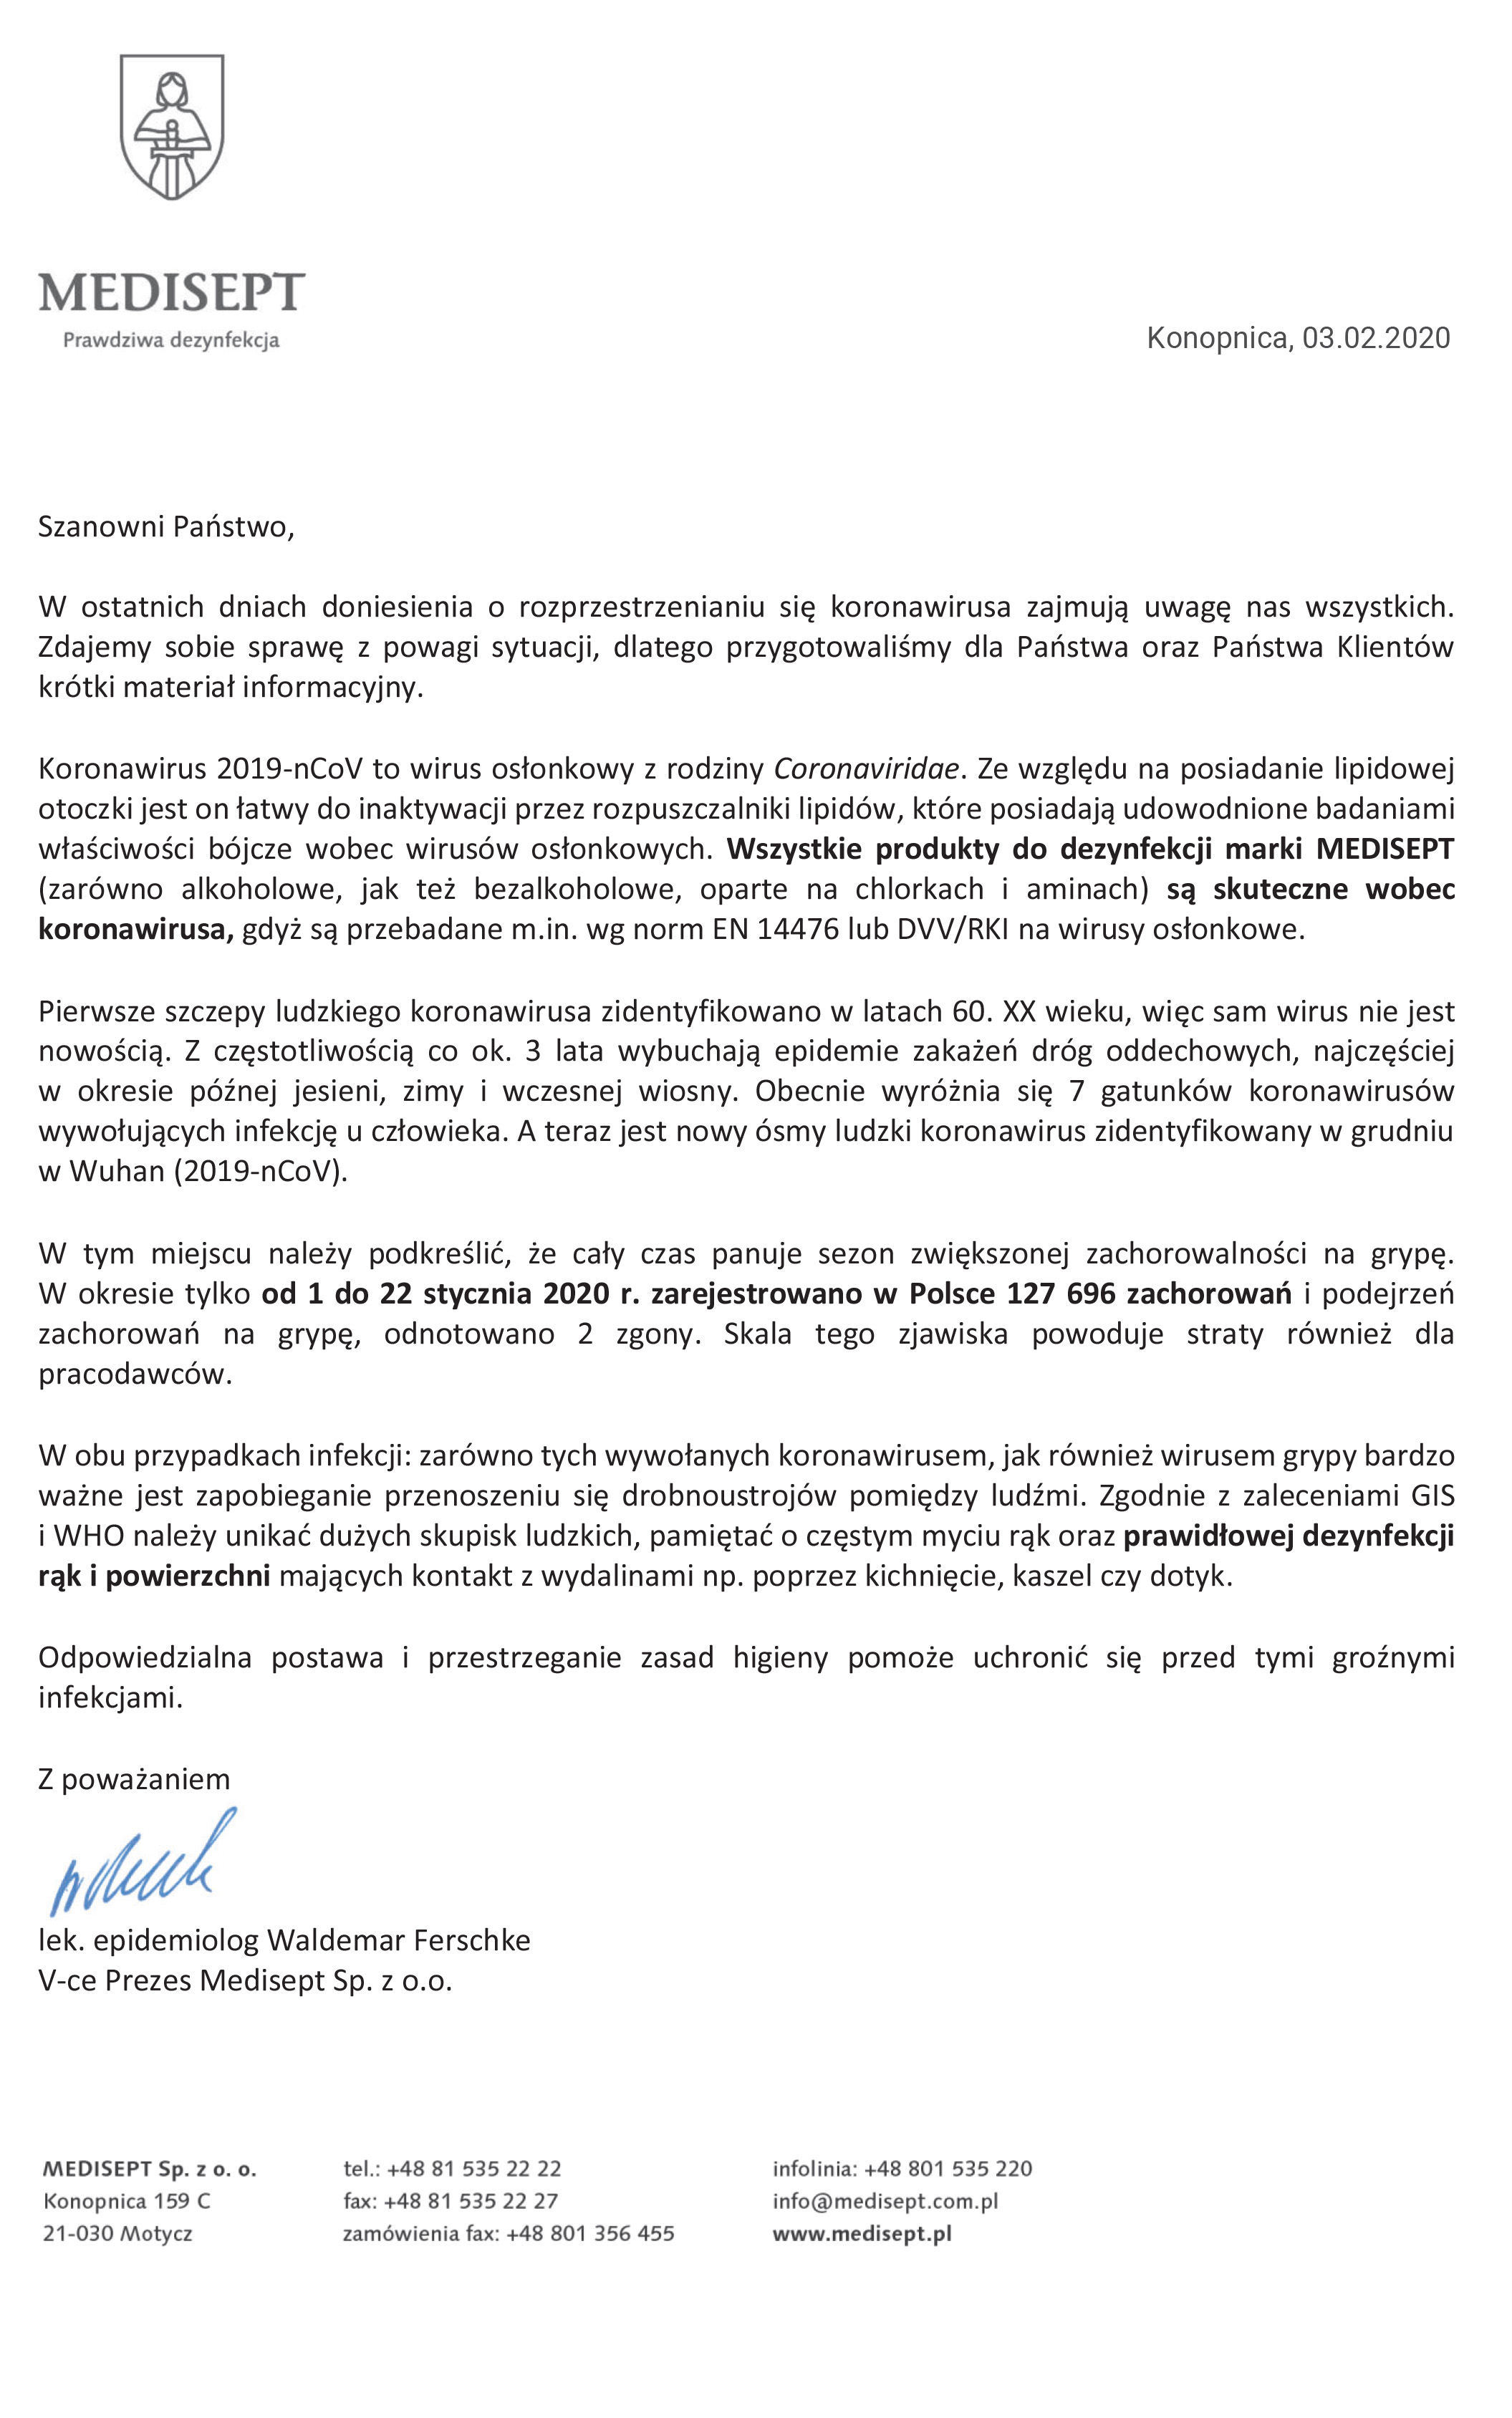 Pismo MEDISEPT skuteczny wobec Koronawirusa_2020.02.03.pdf